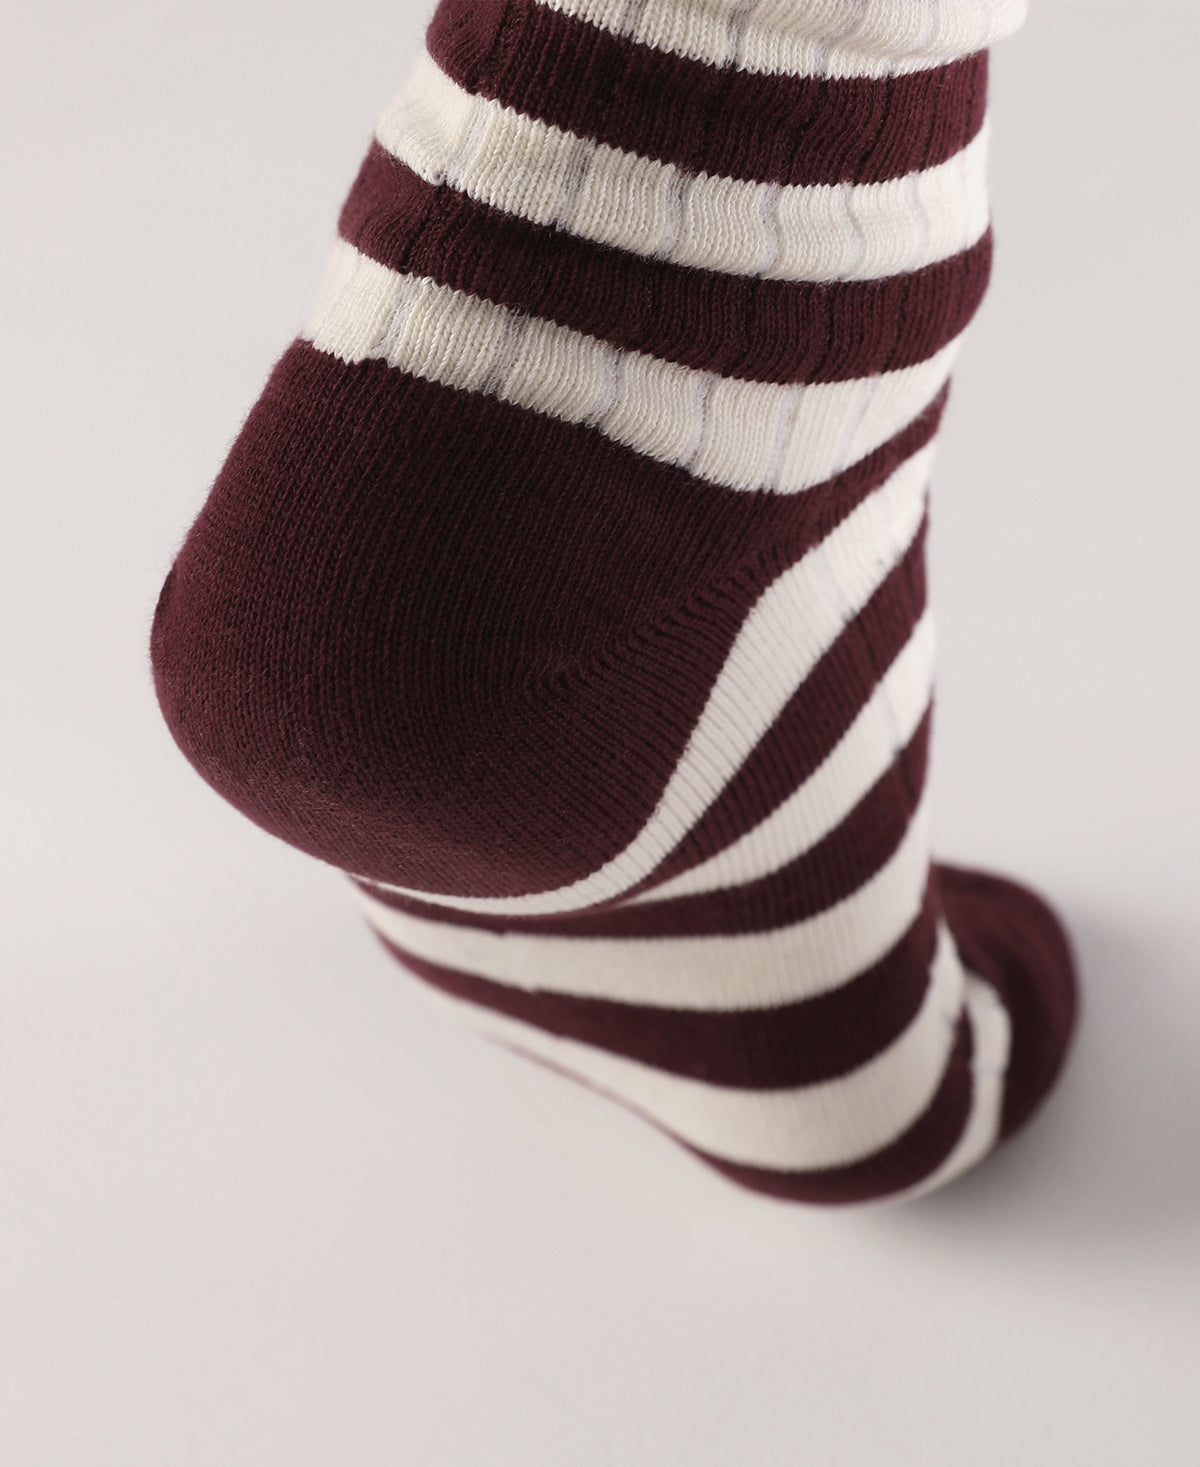 Retro Striped Cotton Socks - Red/White